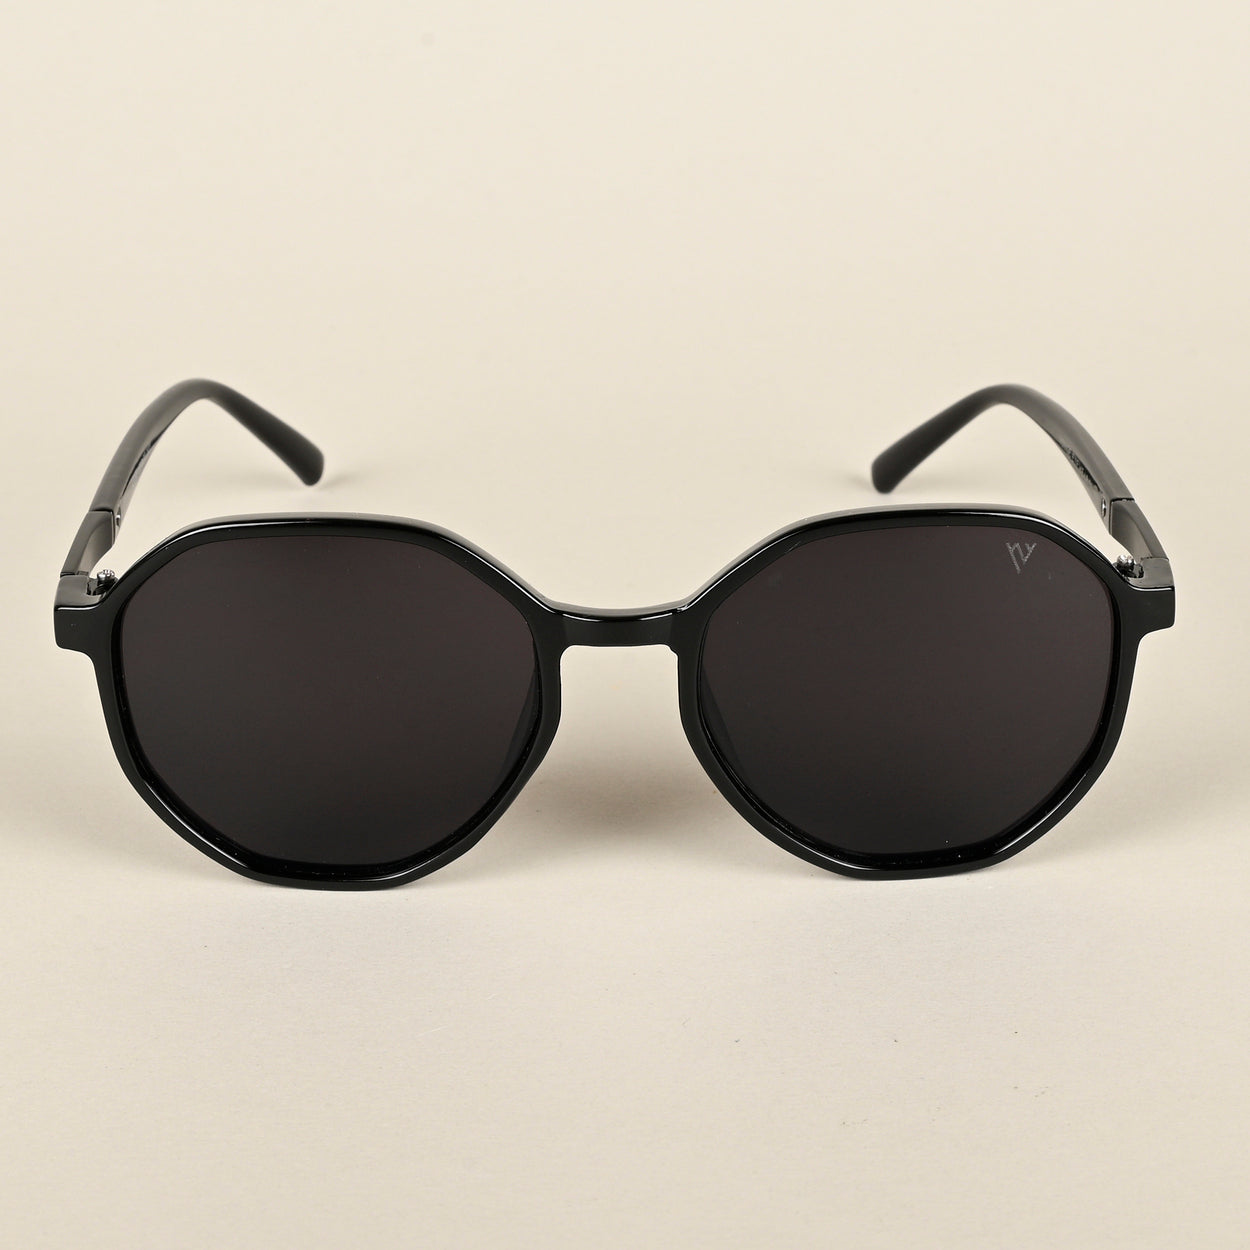 Voyage Black Geometric Sunglasses for Women (A3098MG4246)